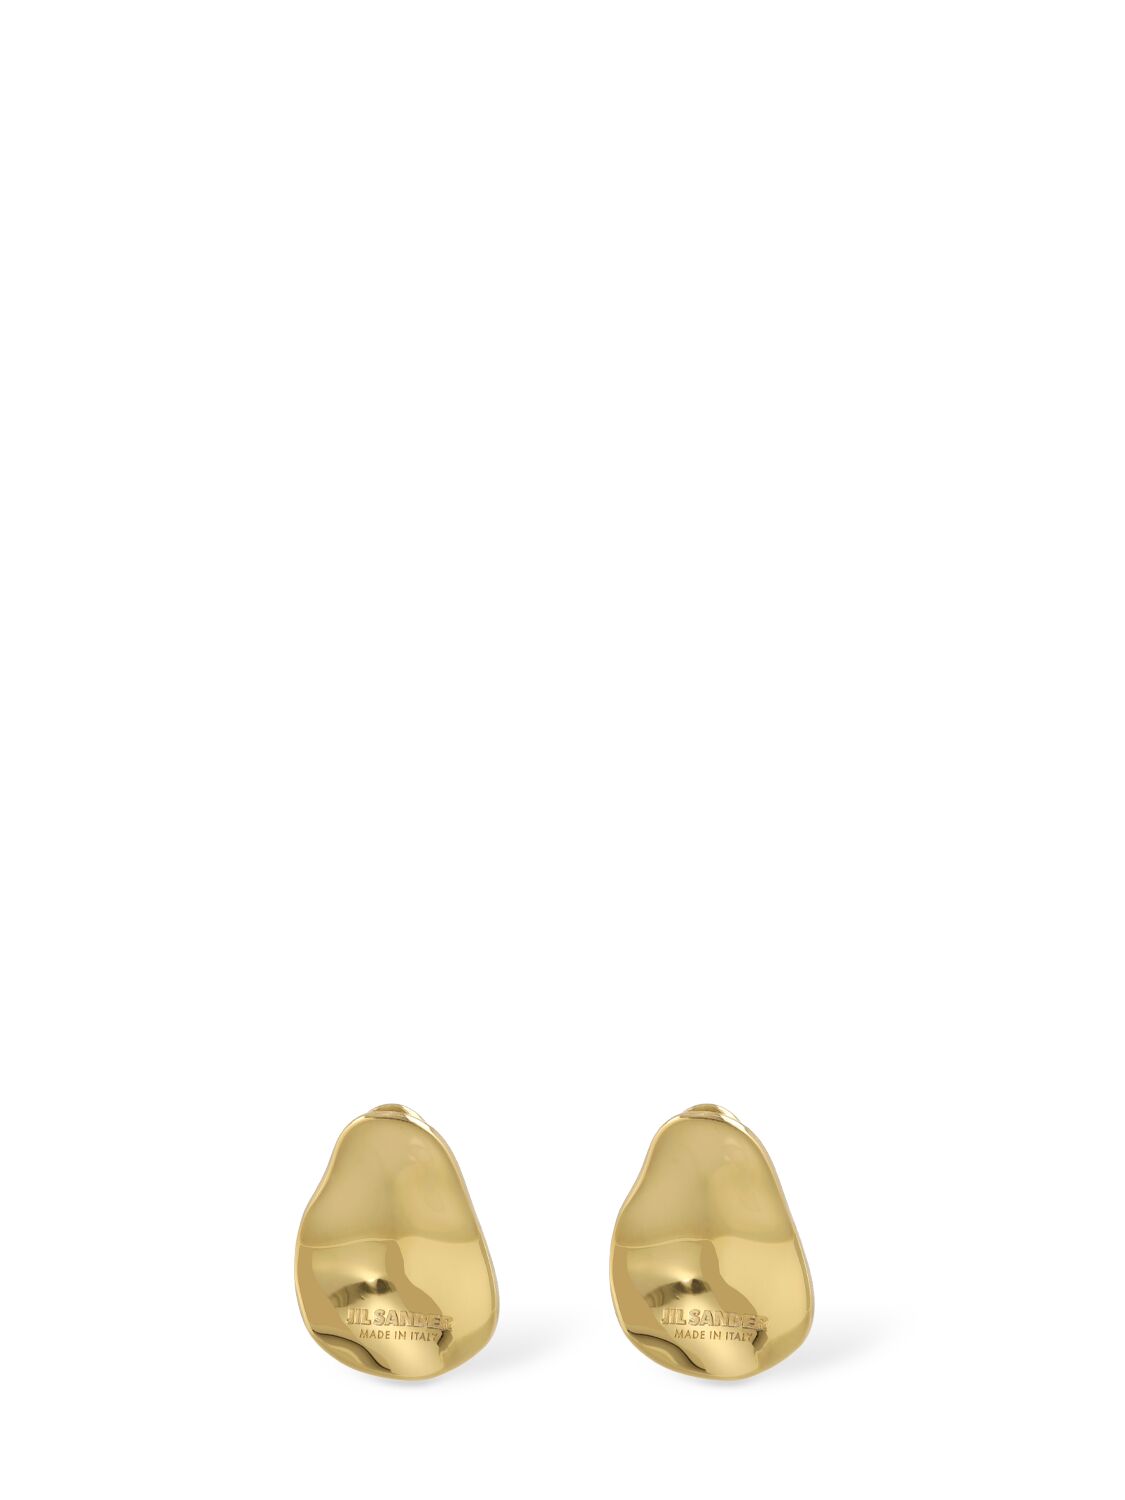 Image of Cw4 5 Stud Earrings